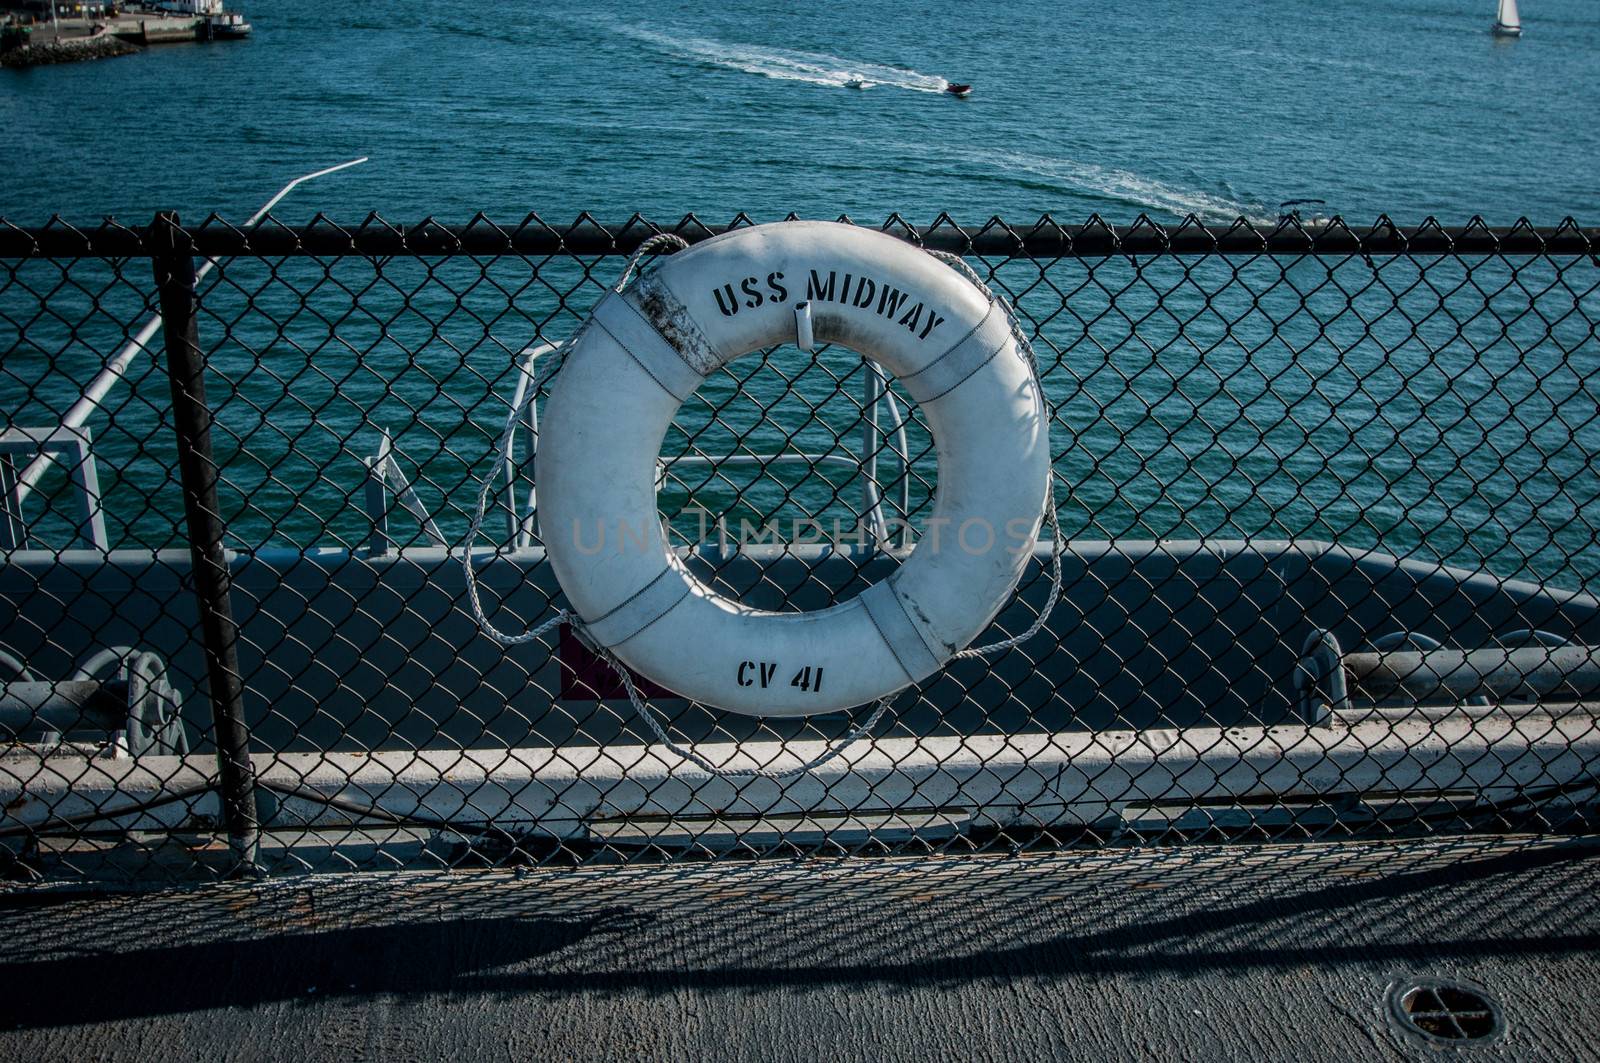 USS midway lifebelt by weltreisendertj